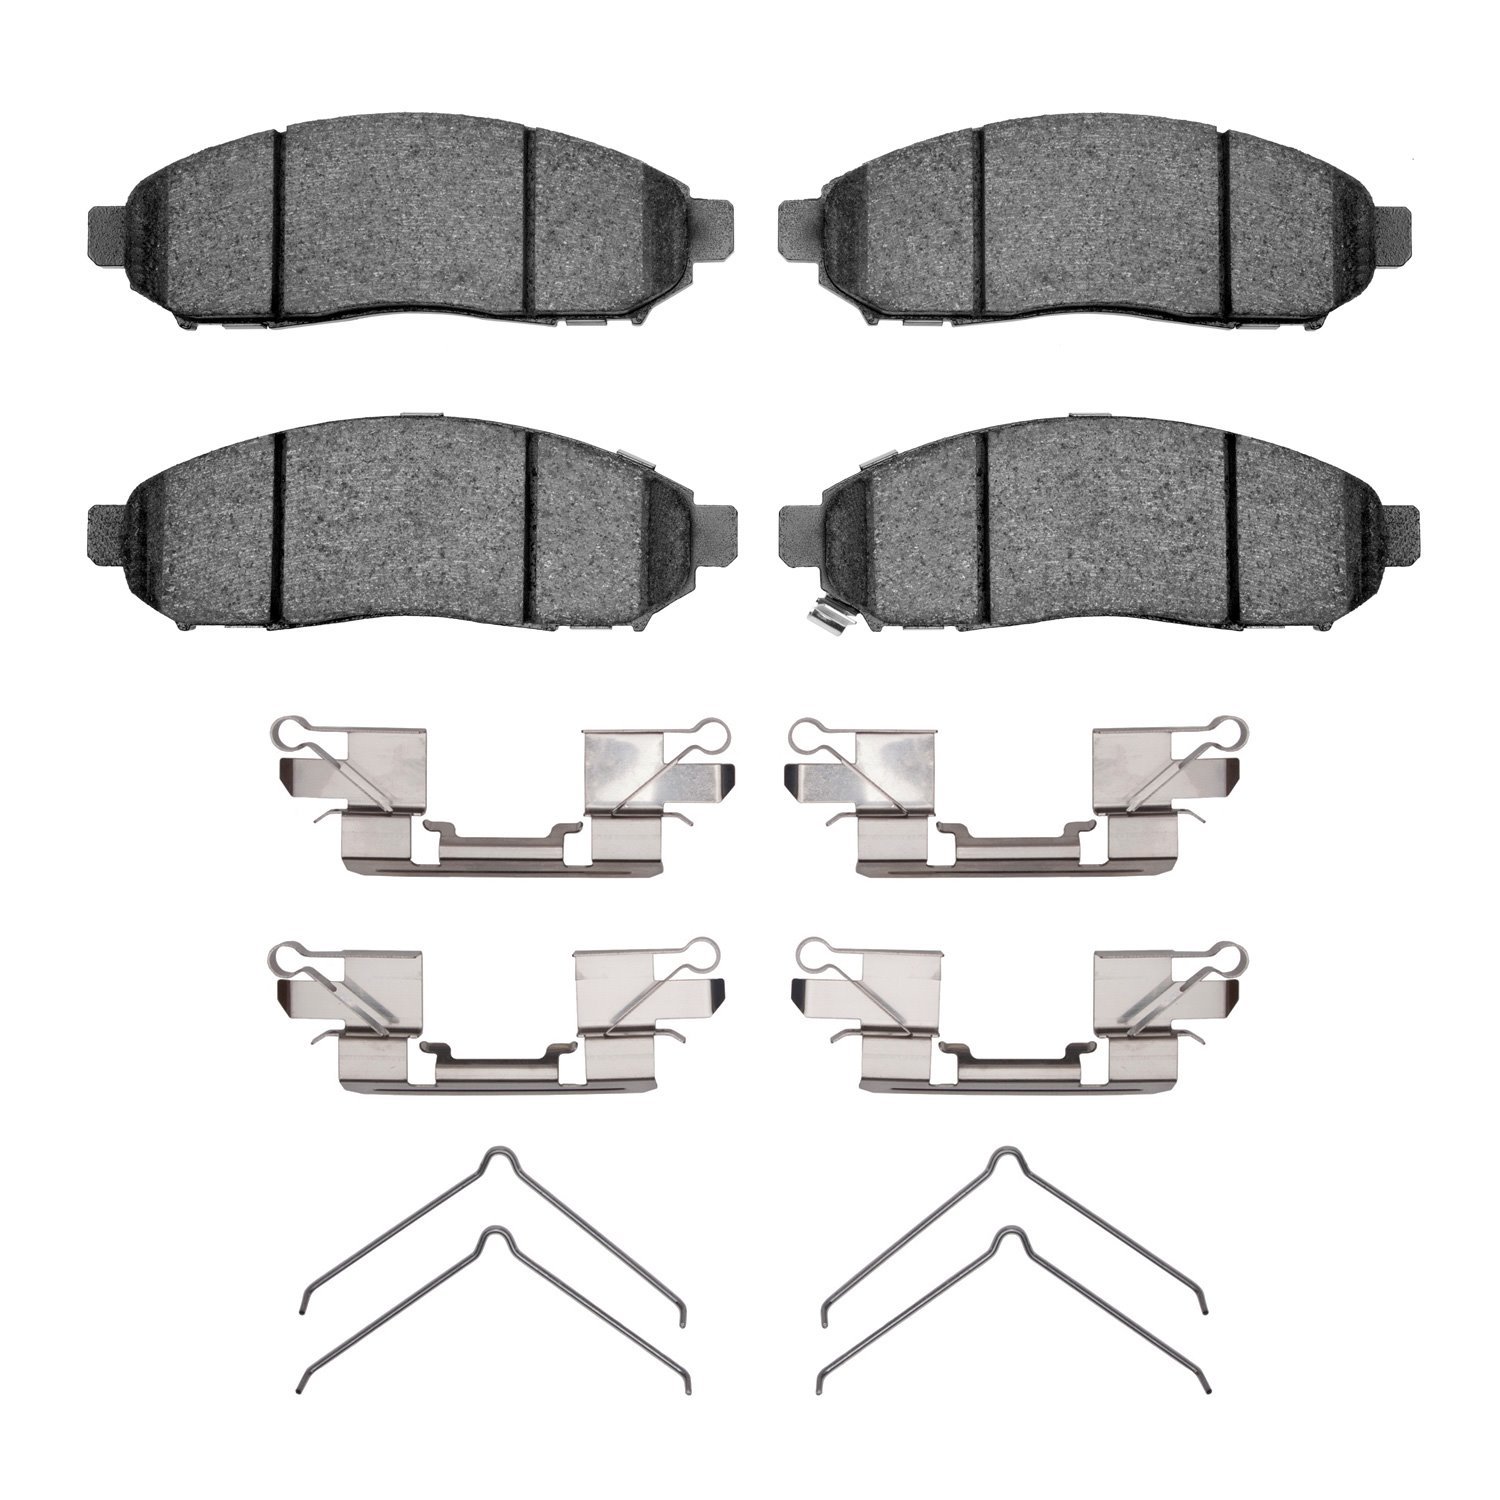 1551-1094-01 5000 Advanced Ceramic Brake Pads & Hardware Kit, Fits Select Multiple Makes/Models, Position: Front